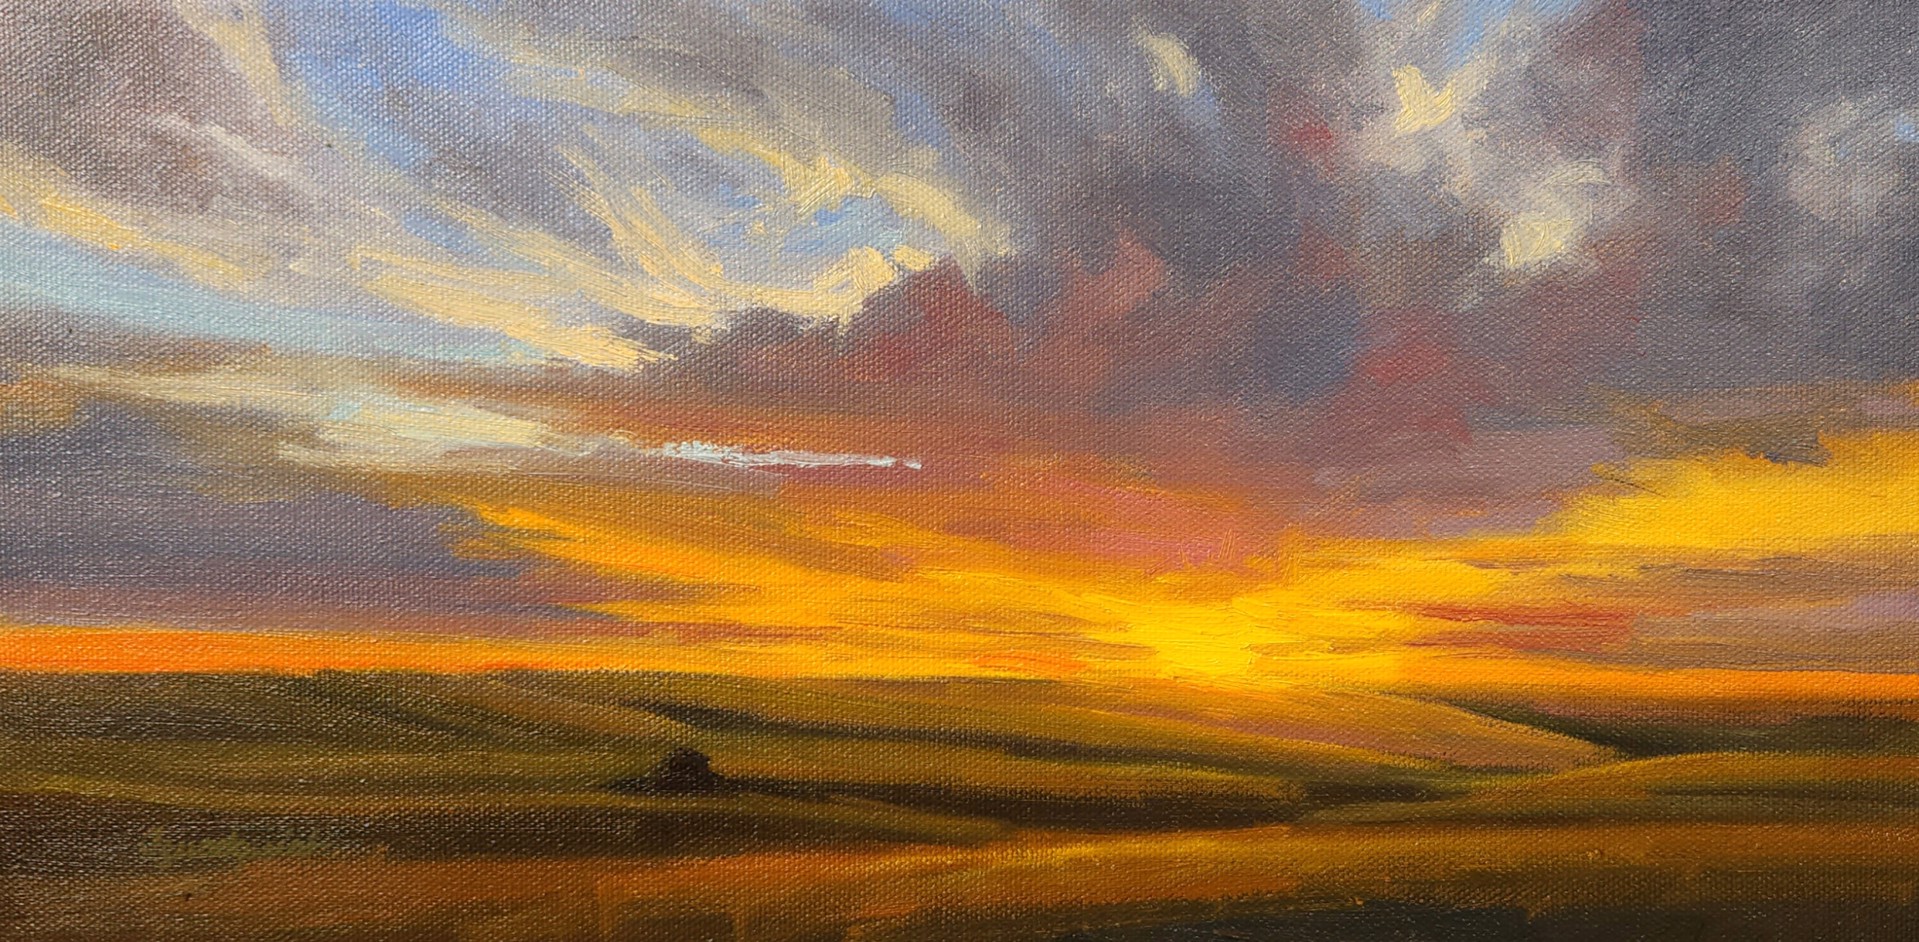 A Burst of Sunset by Cristine Sundquist